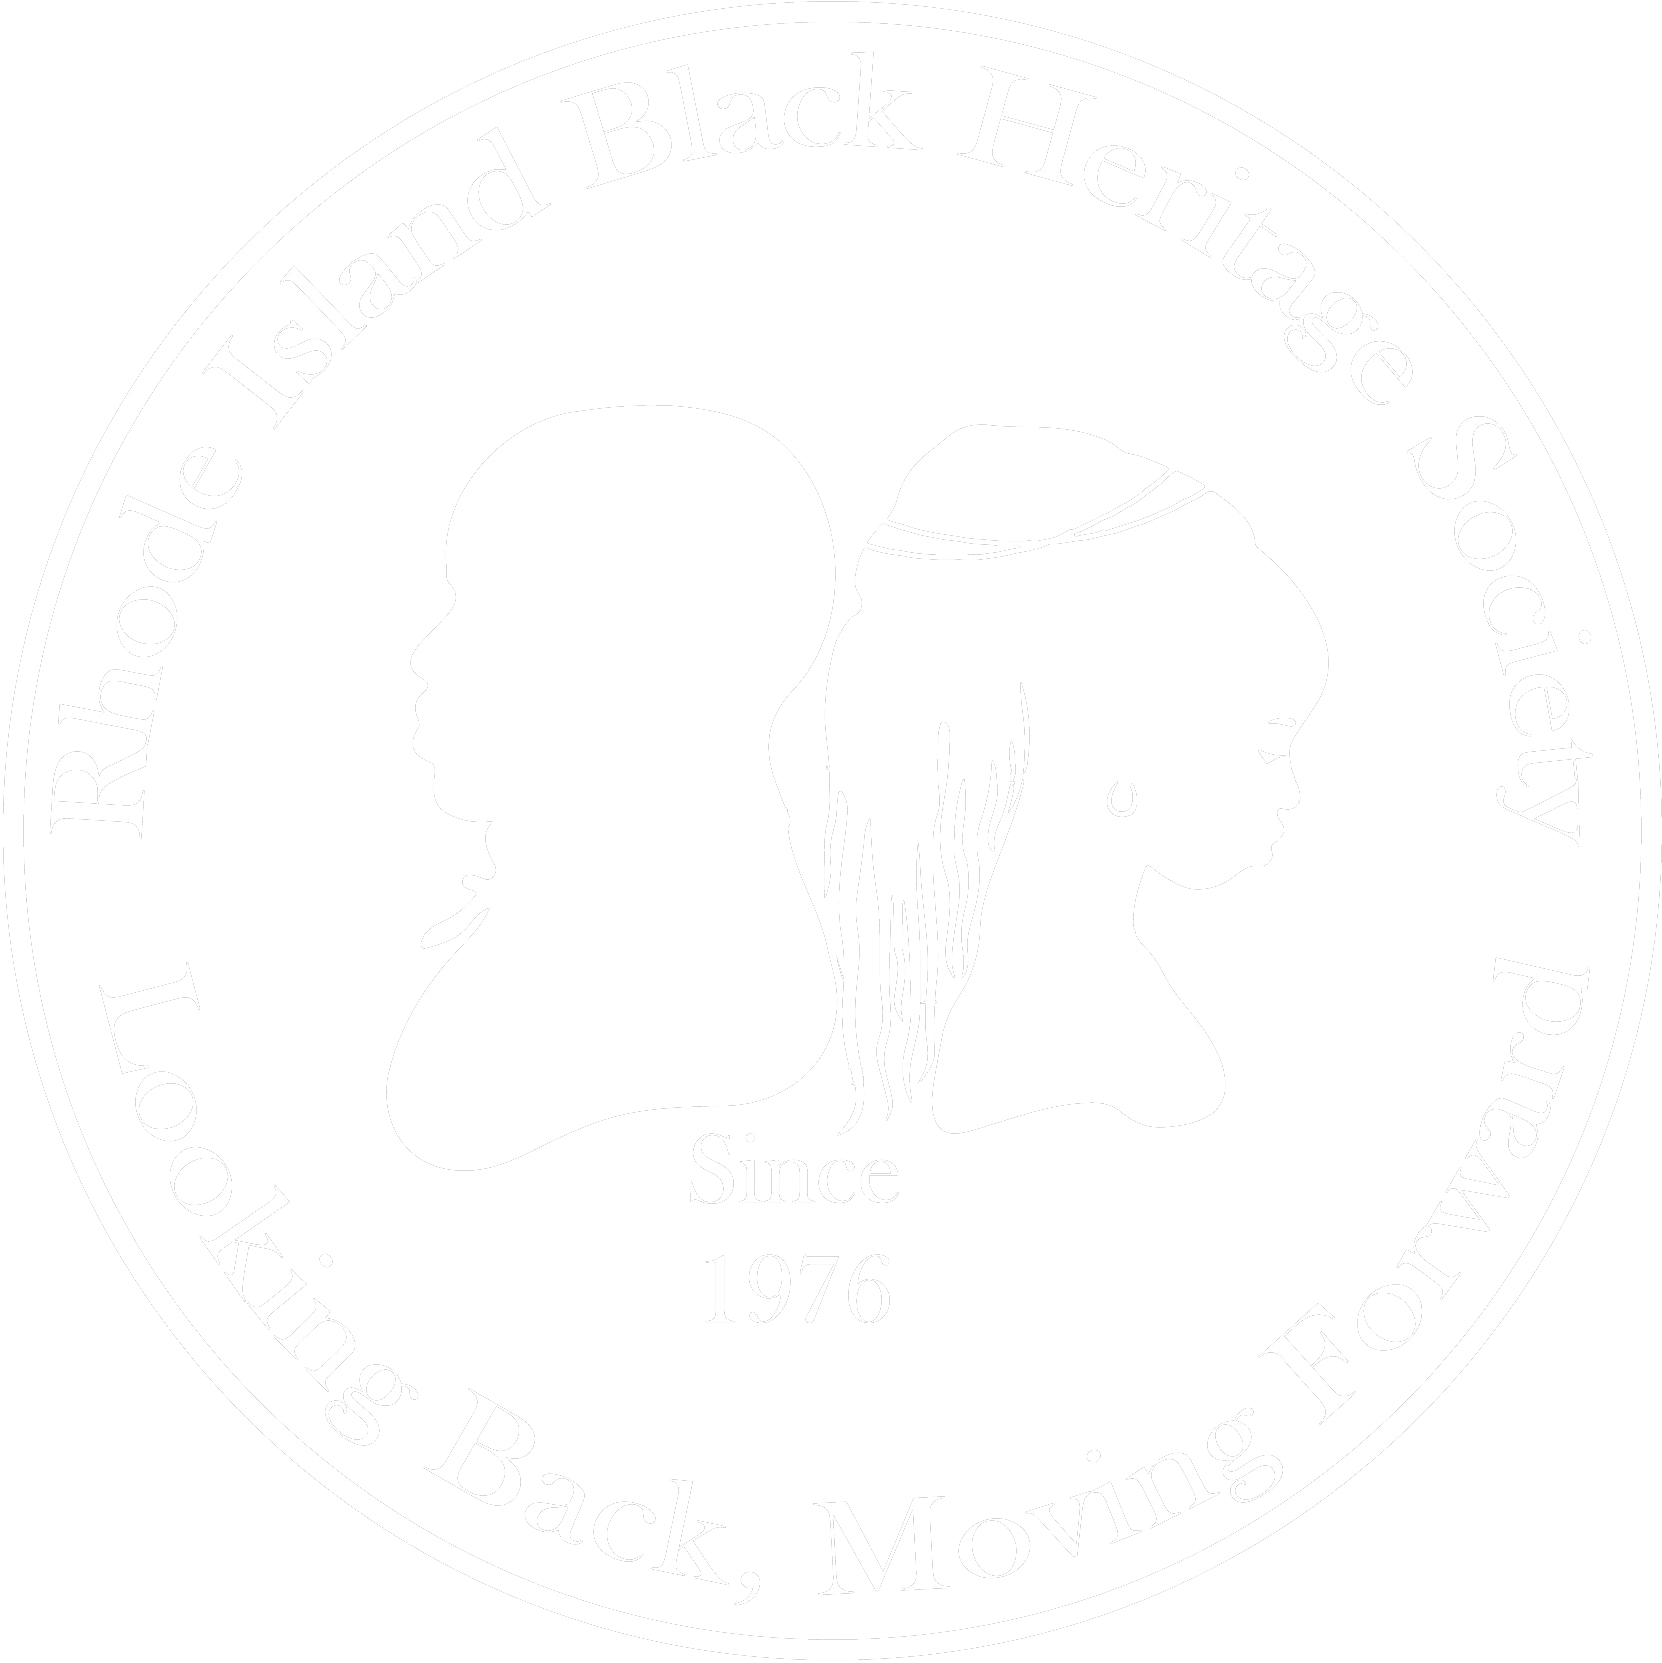 Rhode Island Black Heritage Society